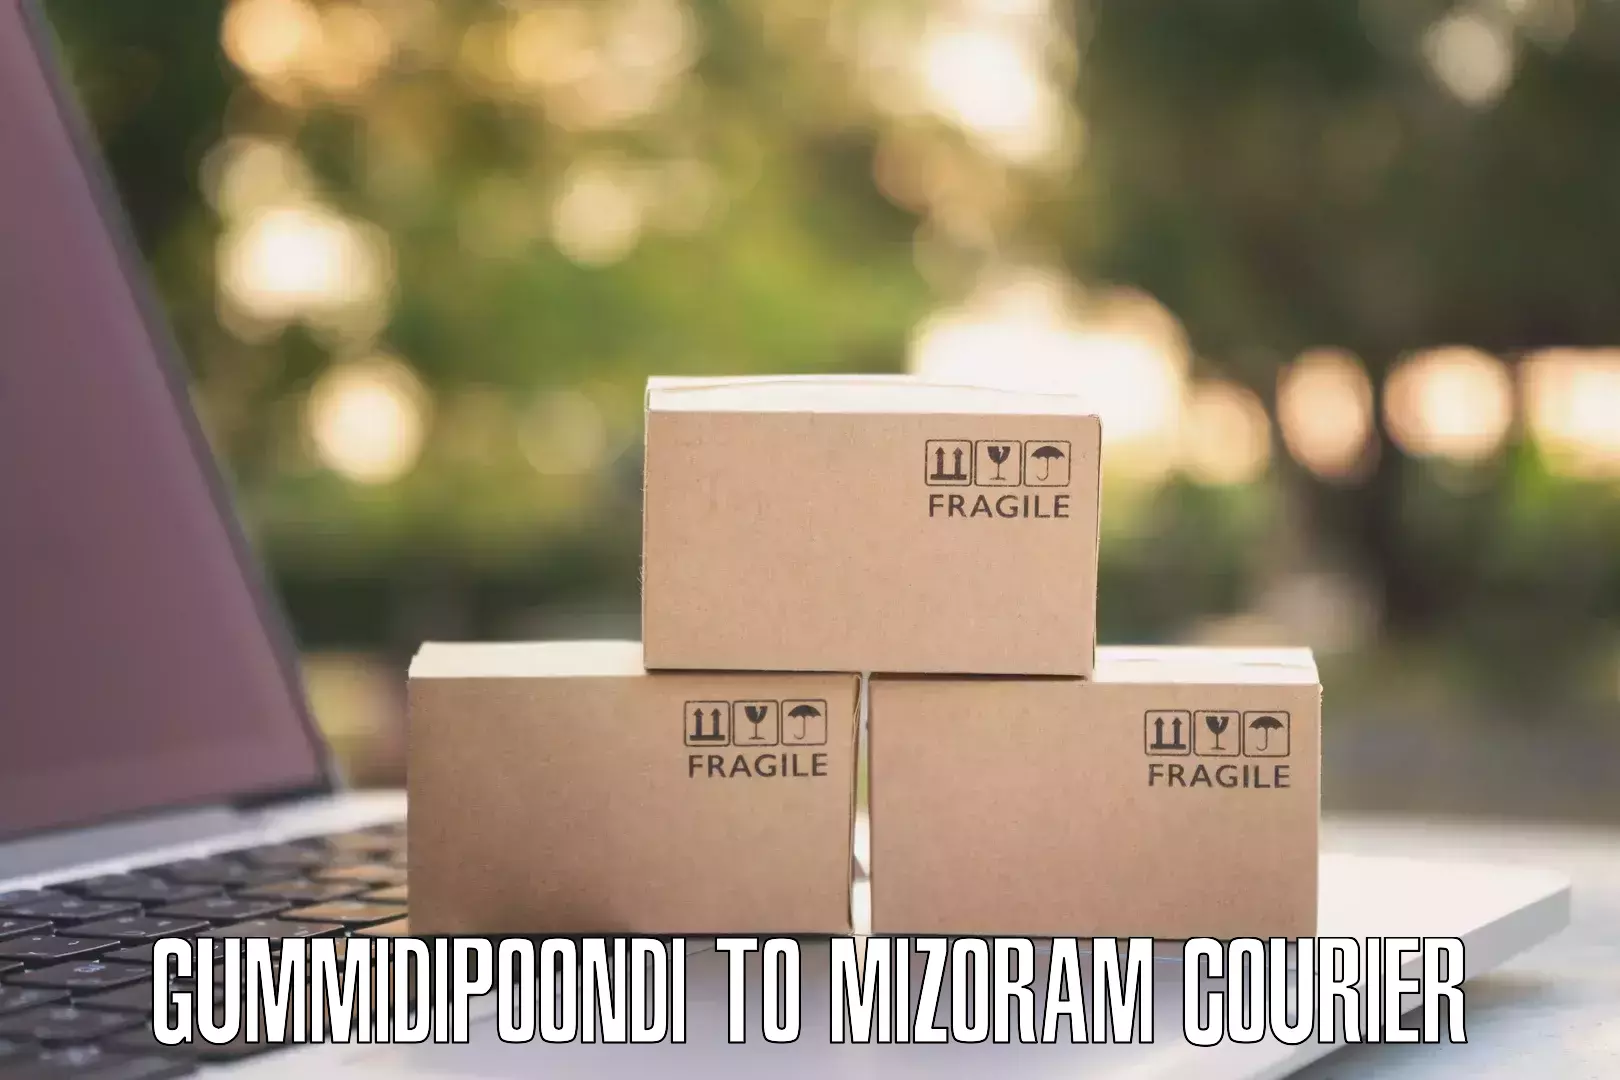 On-demand shipping options Gummidipoondi to Aizawl